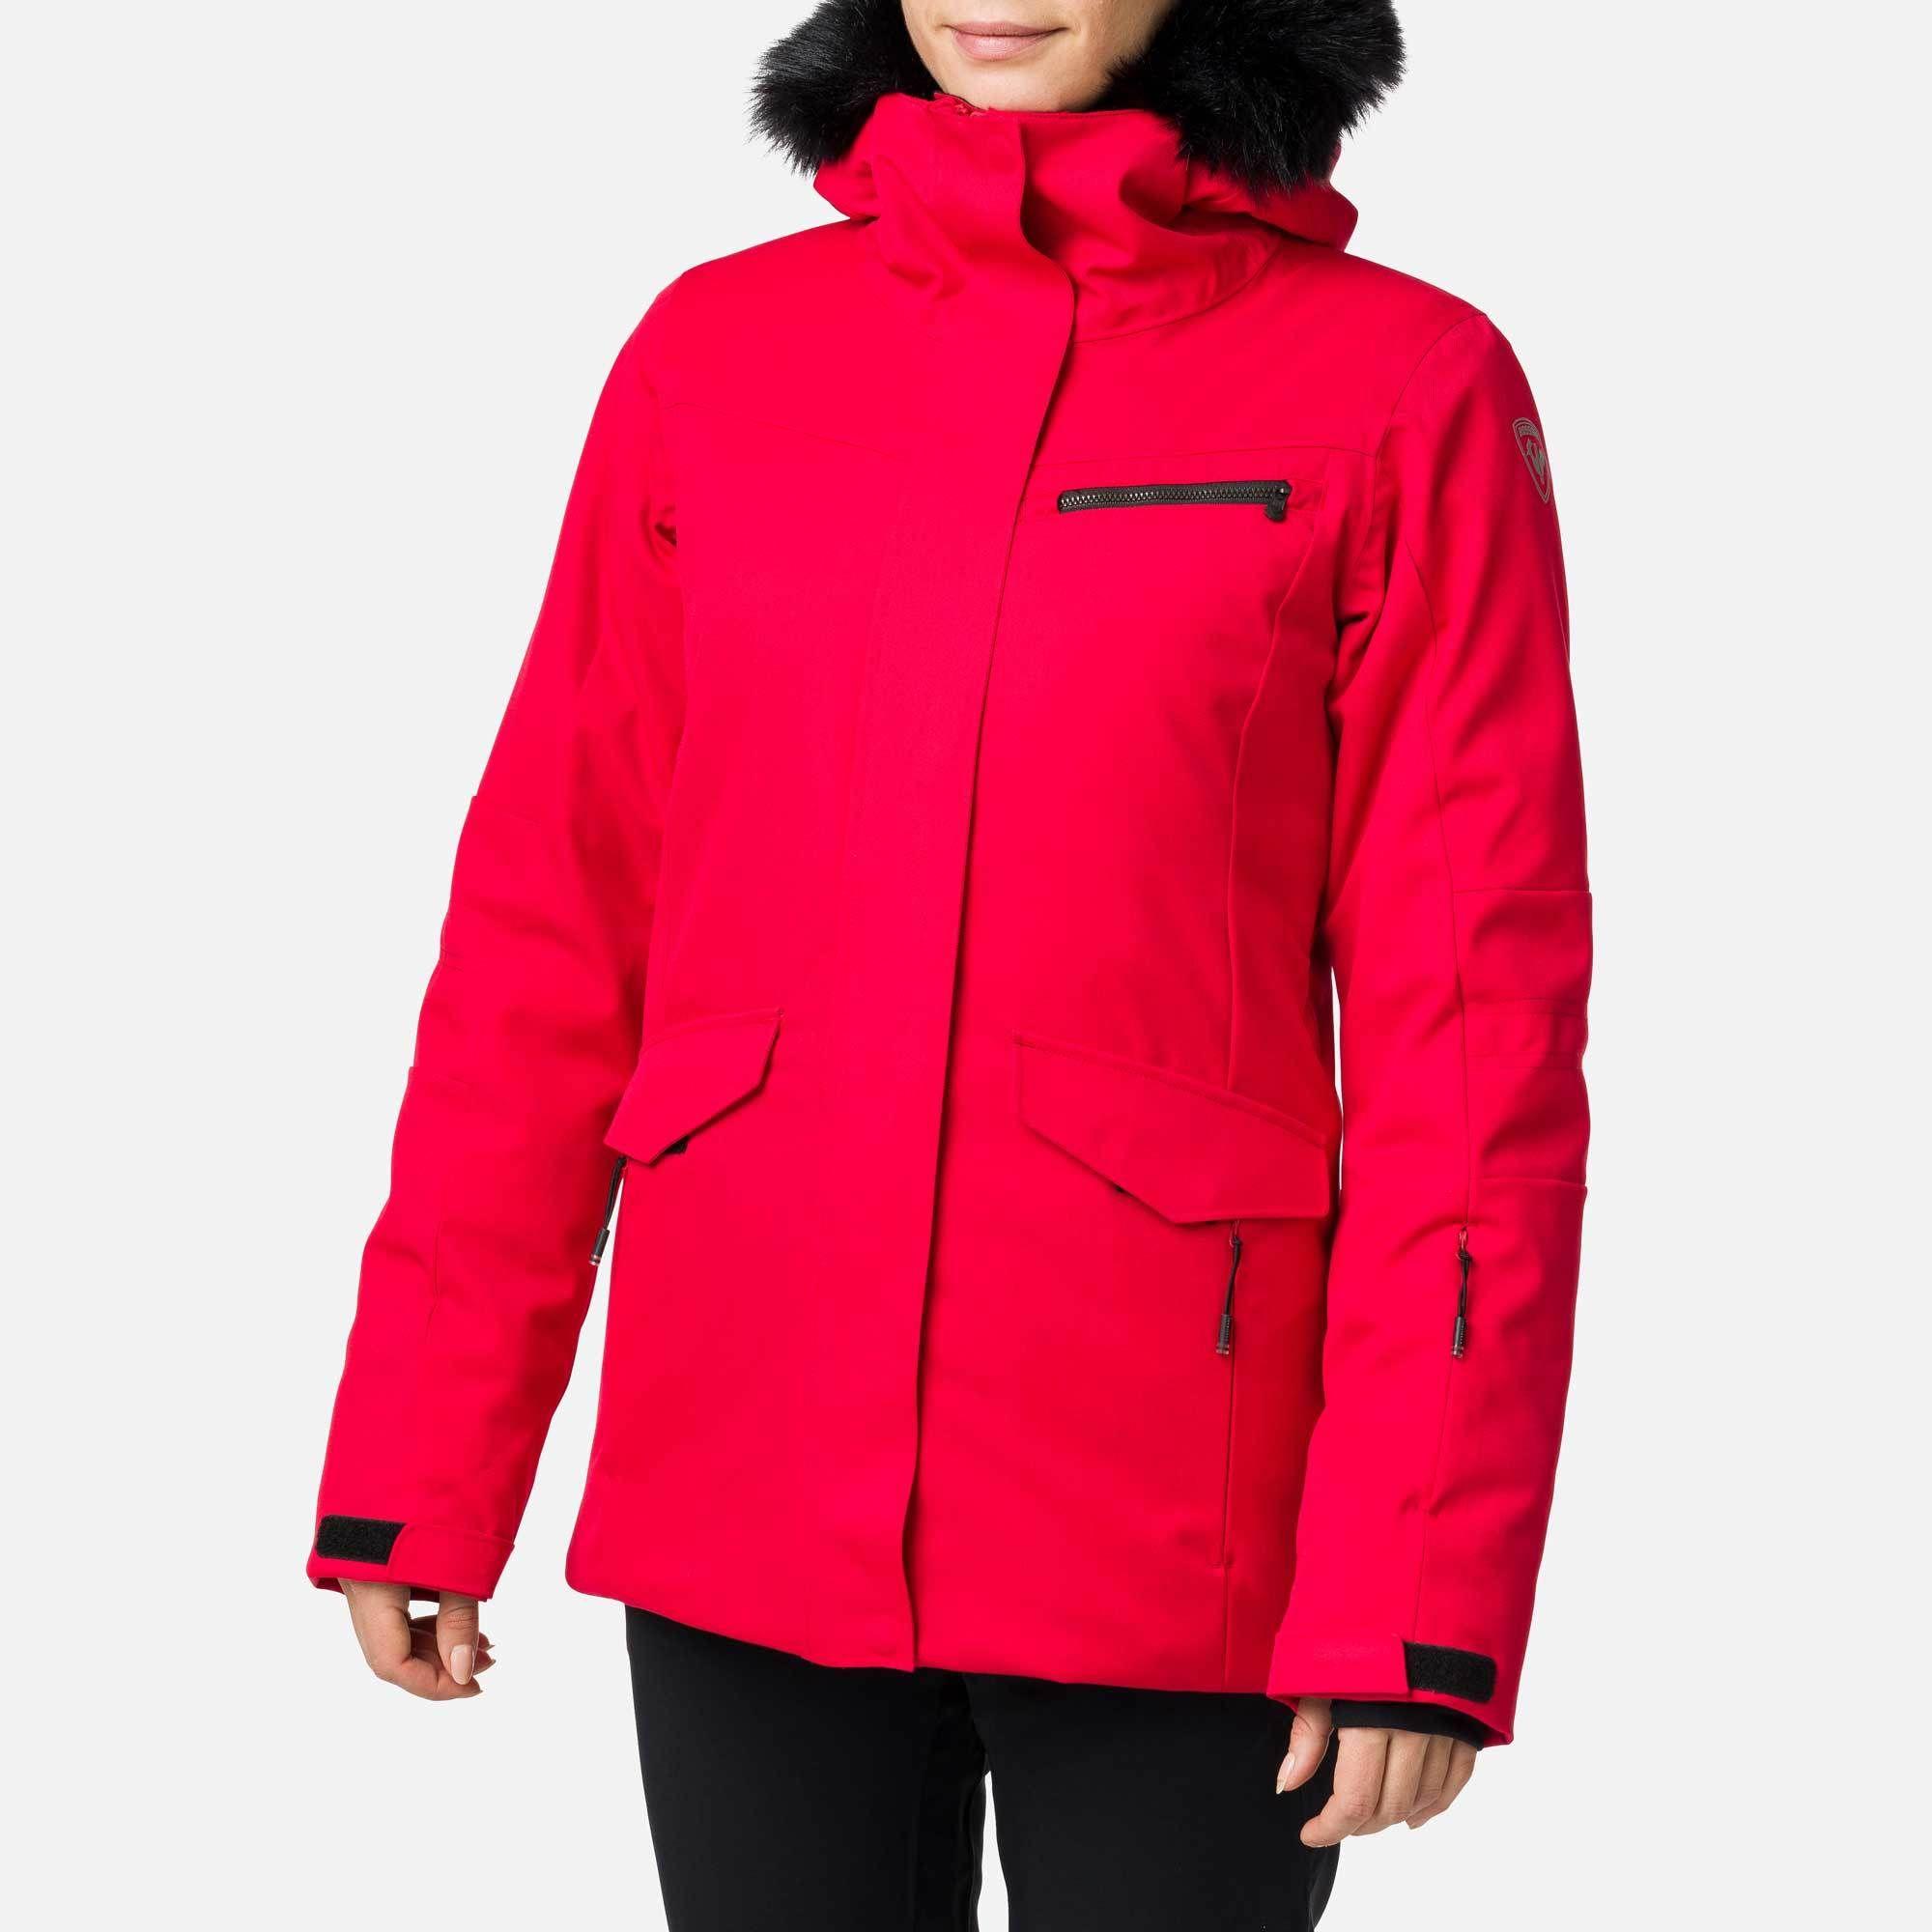 Rossignol Women’s Parka Red Ski Jacket (Size 10 UK)